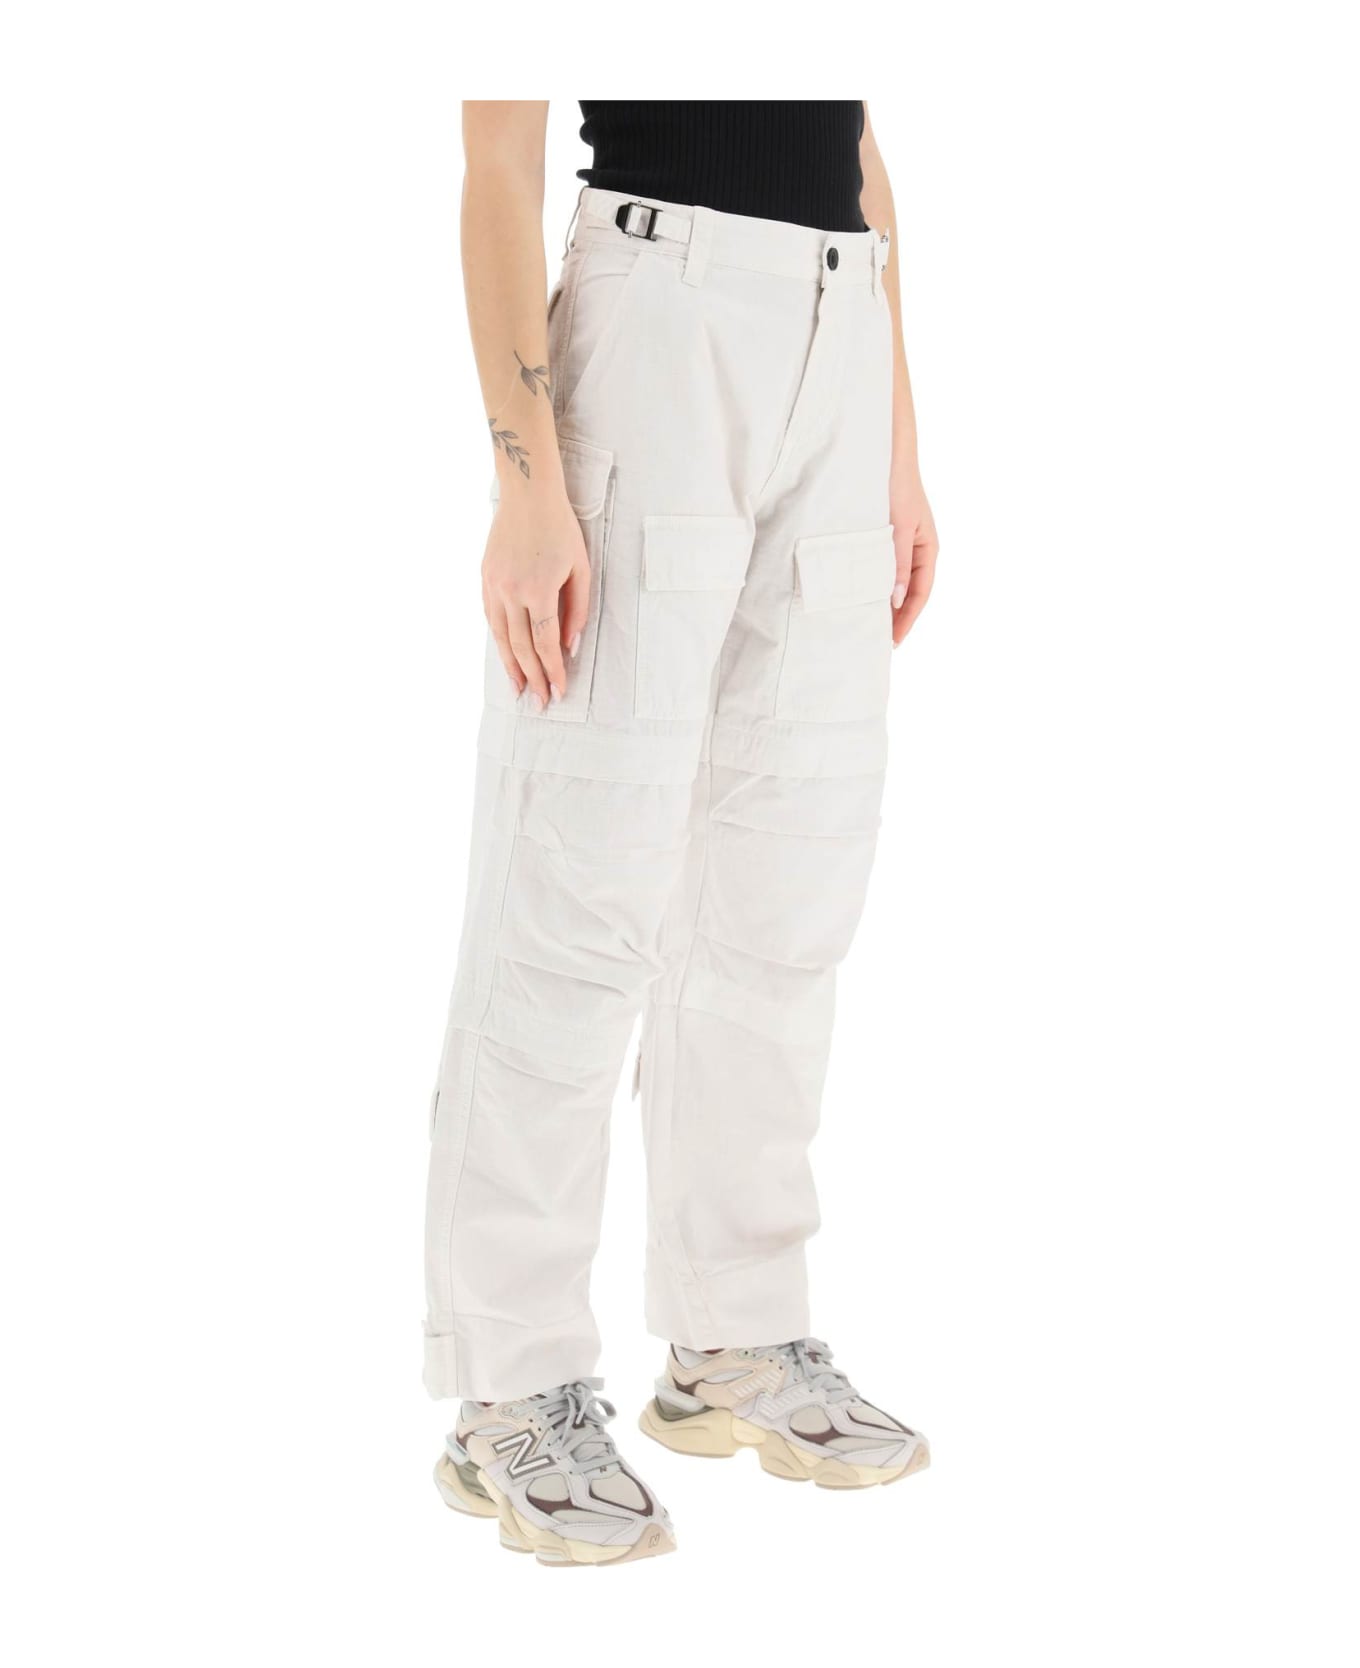 DARKPARK 'julia' Ripstop Cotton Cargo Pants - OFF WHITE (White) ボトムス